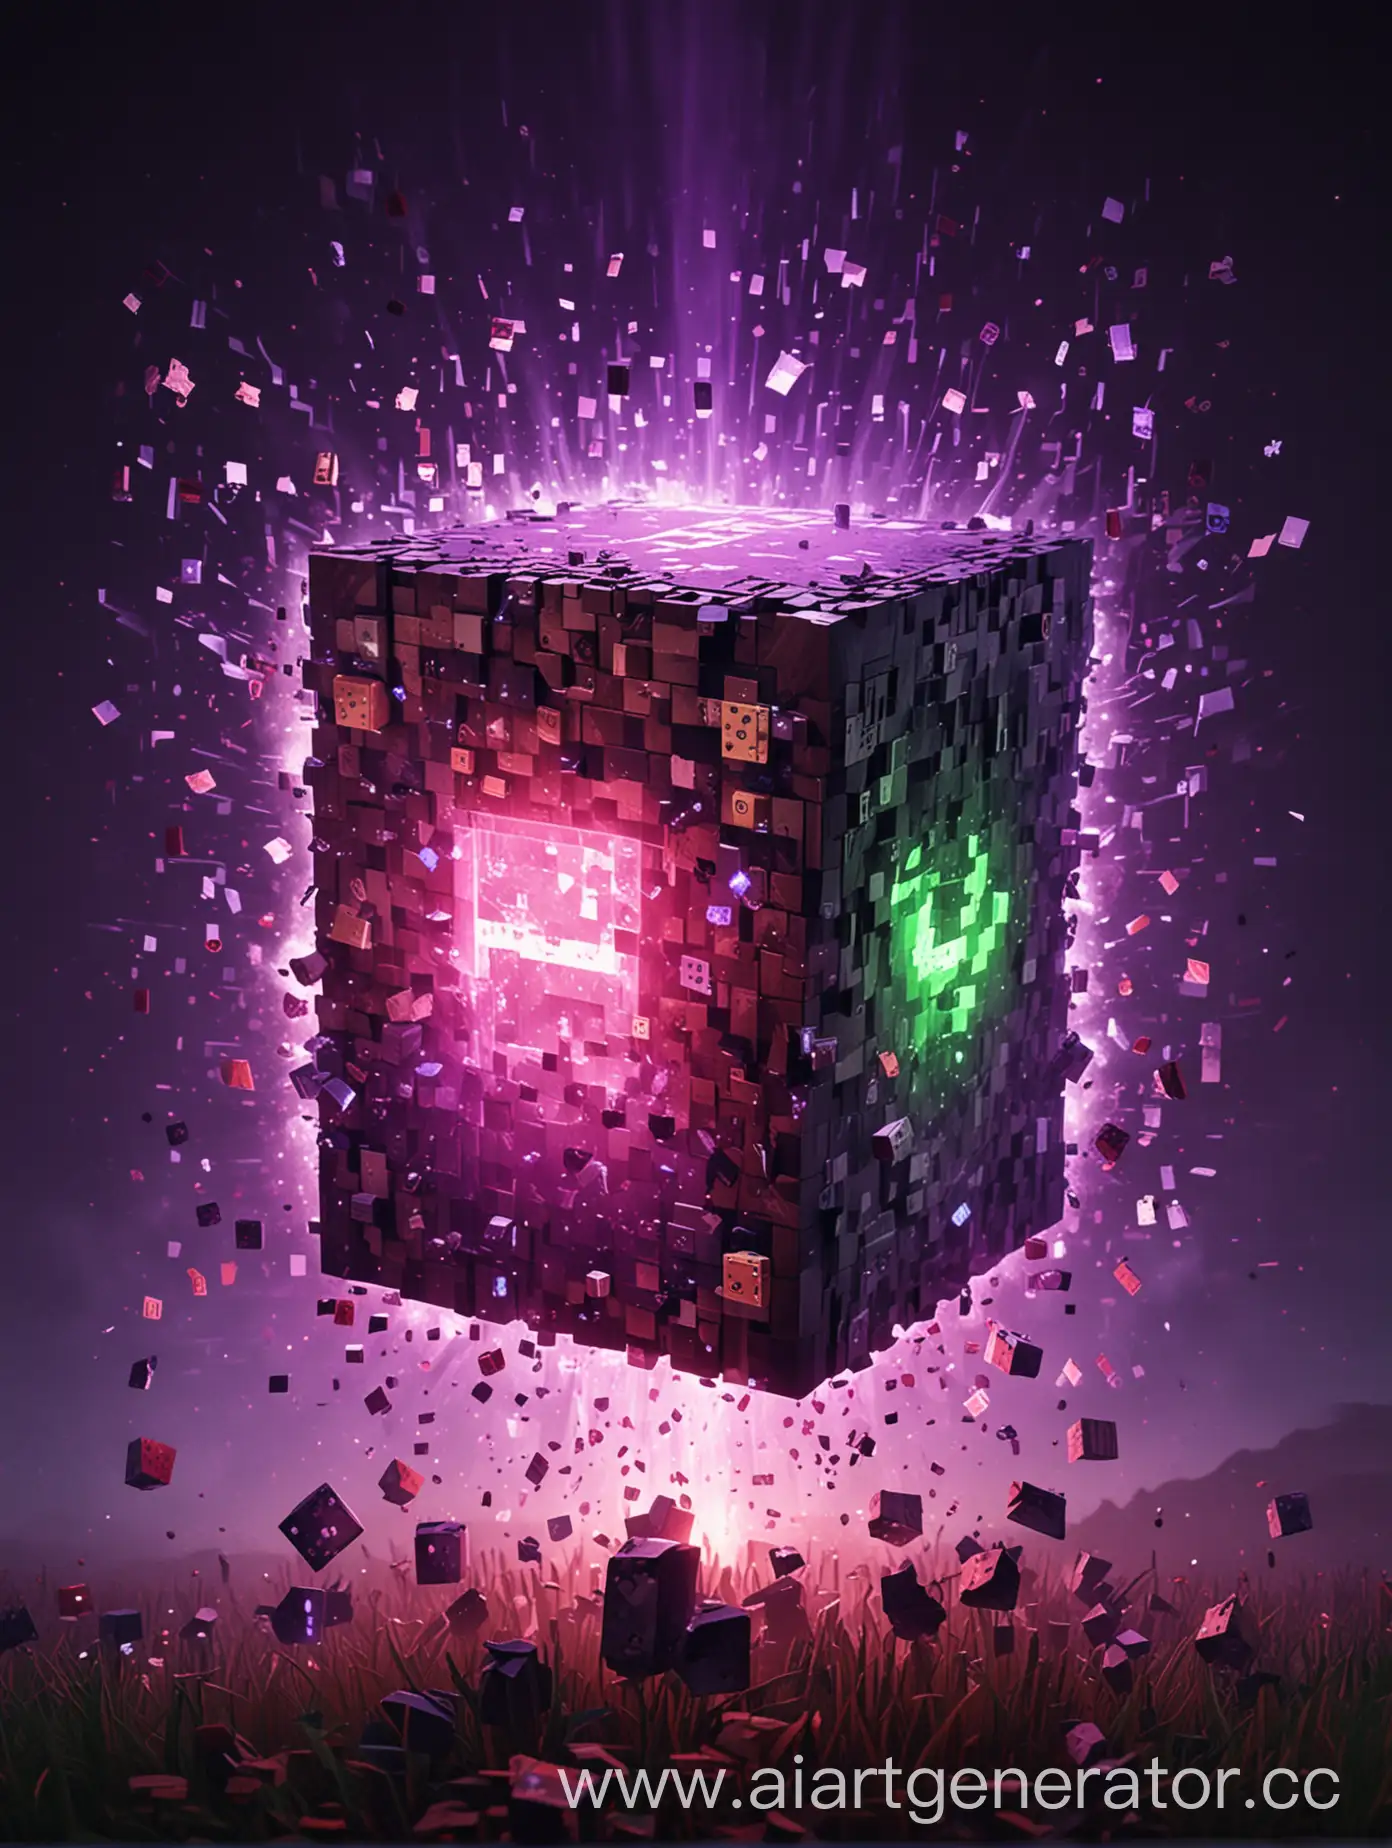 Minecraft-Command-Block-Explosion-in-Dark-Field-with-KitsumiBook-Inscription